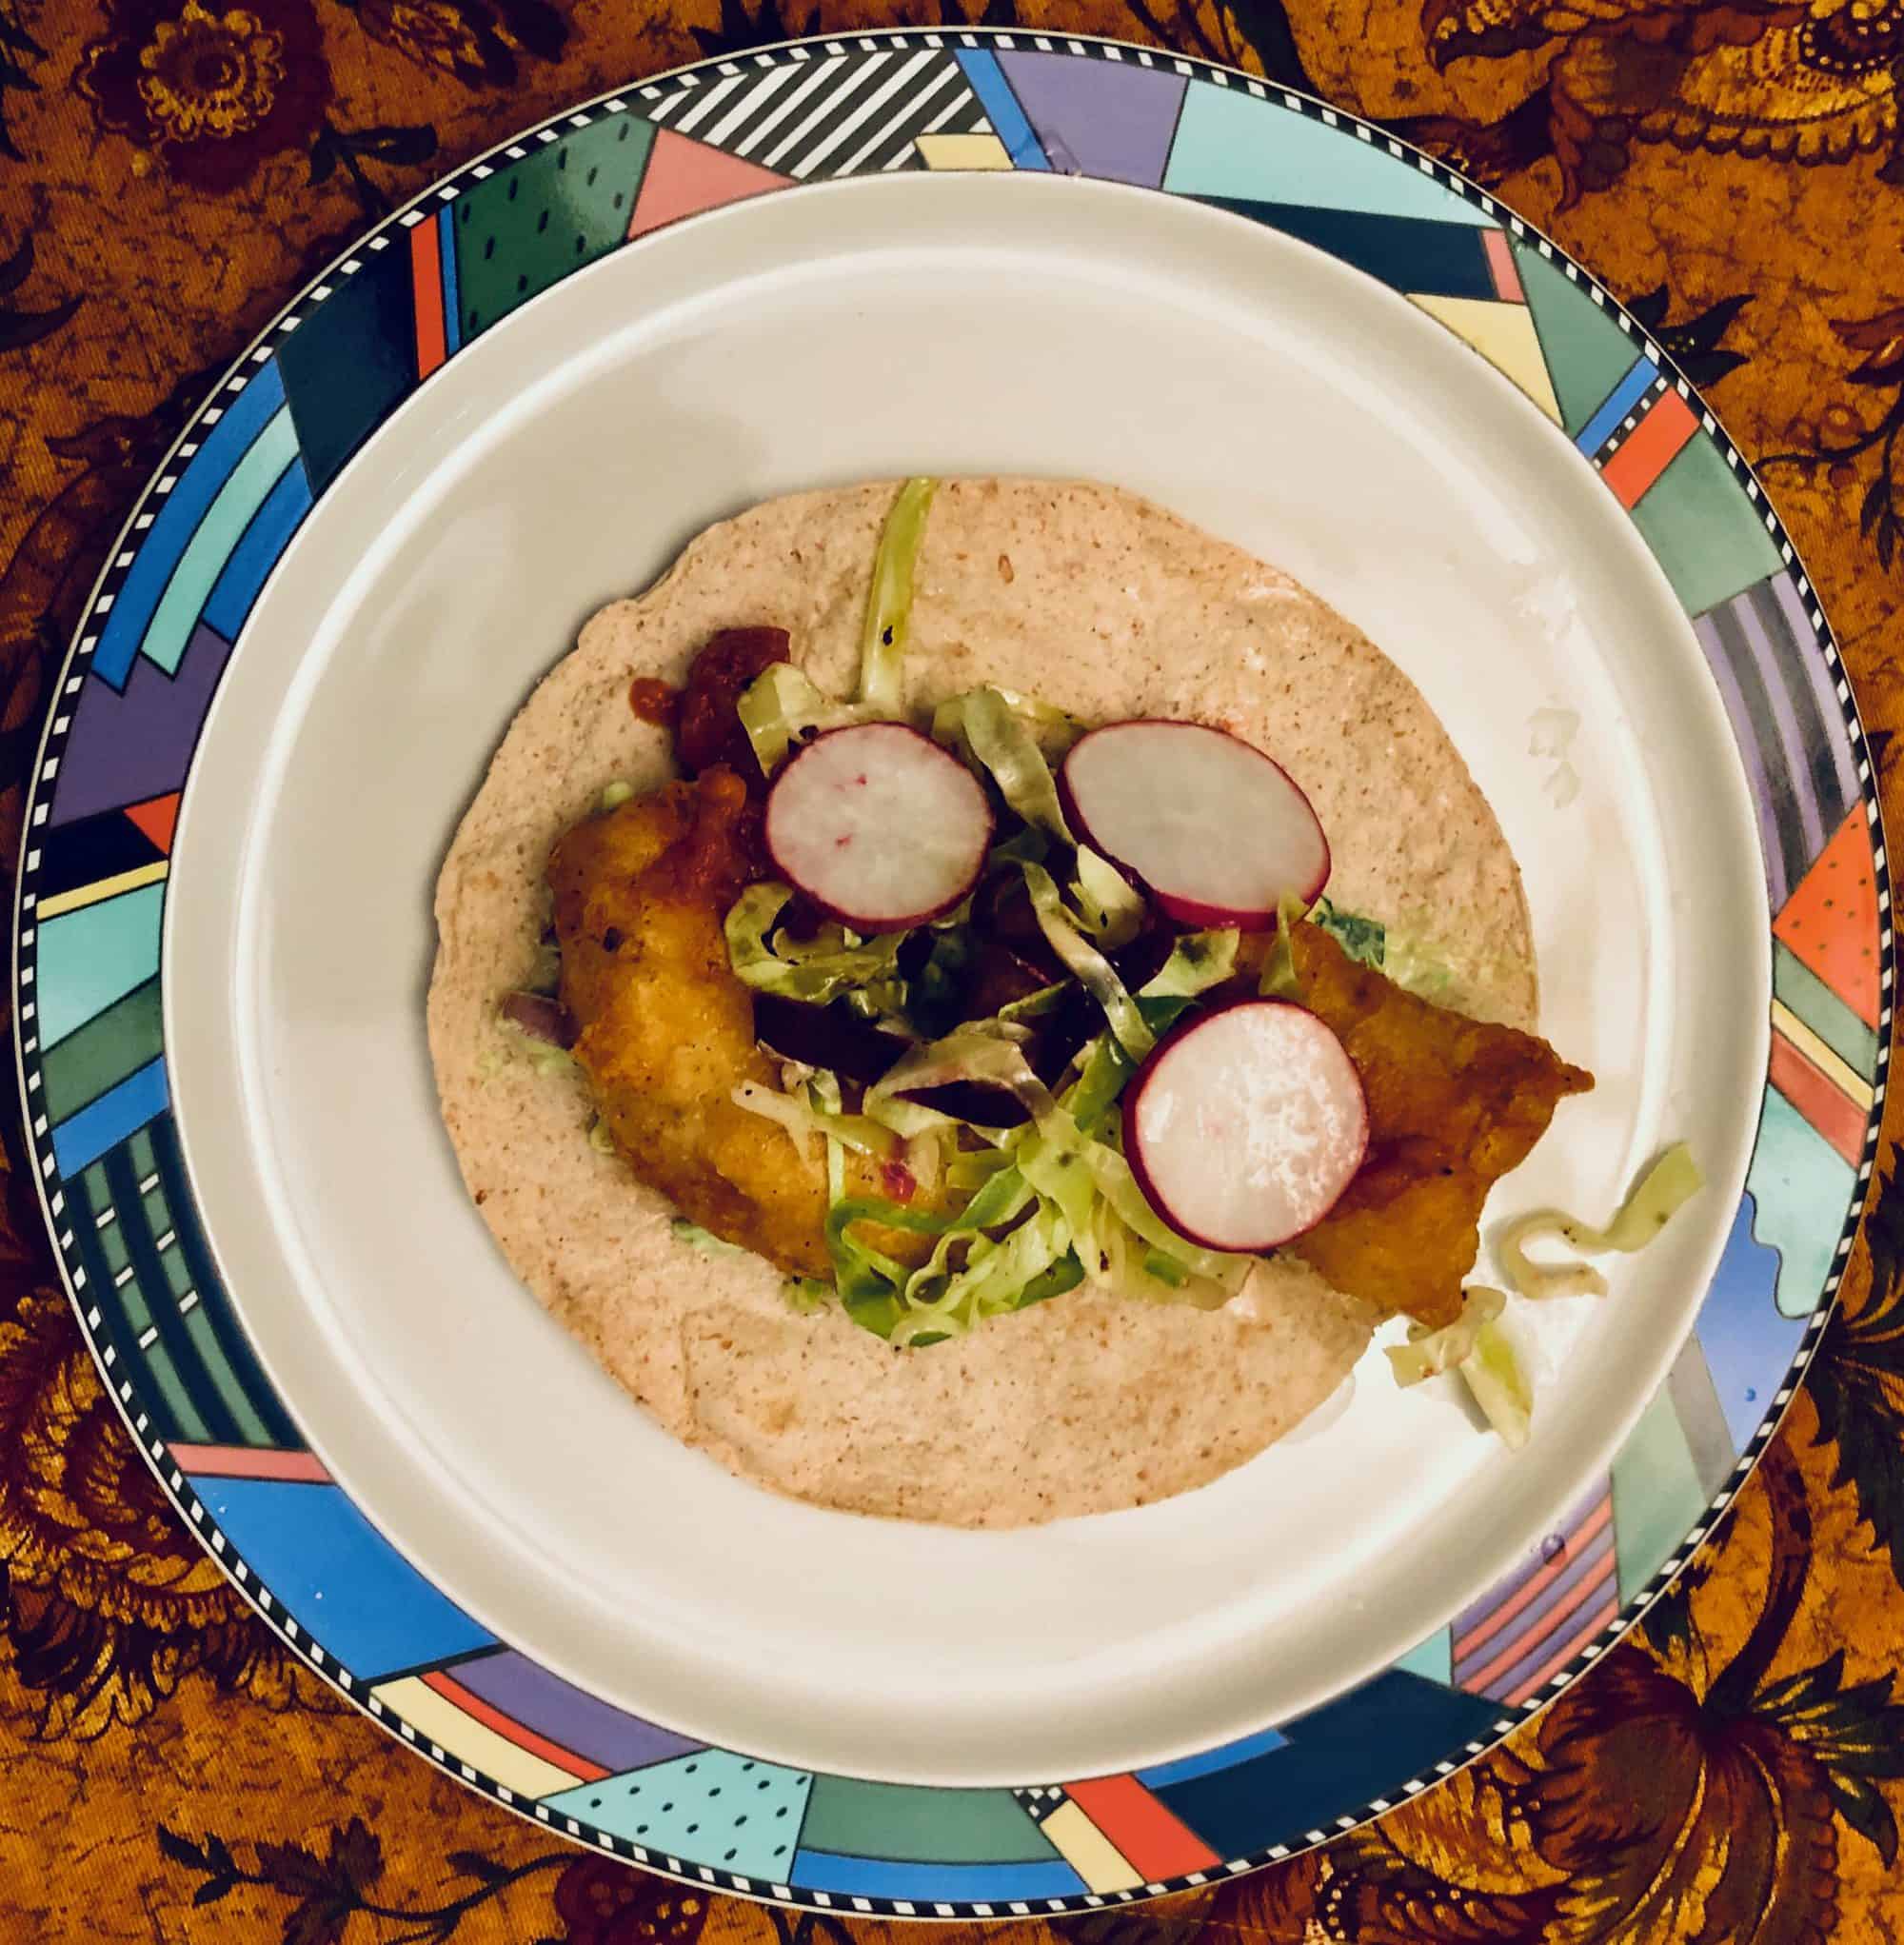 Baja Fish Tacos with Avocado Salsa and Slaw